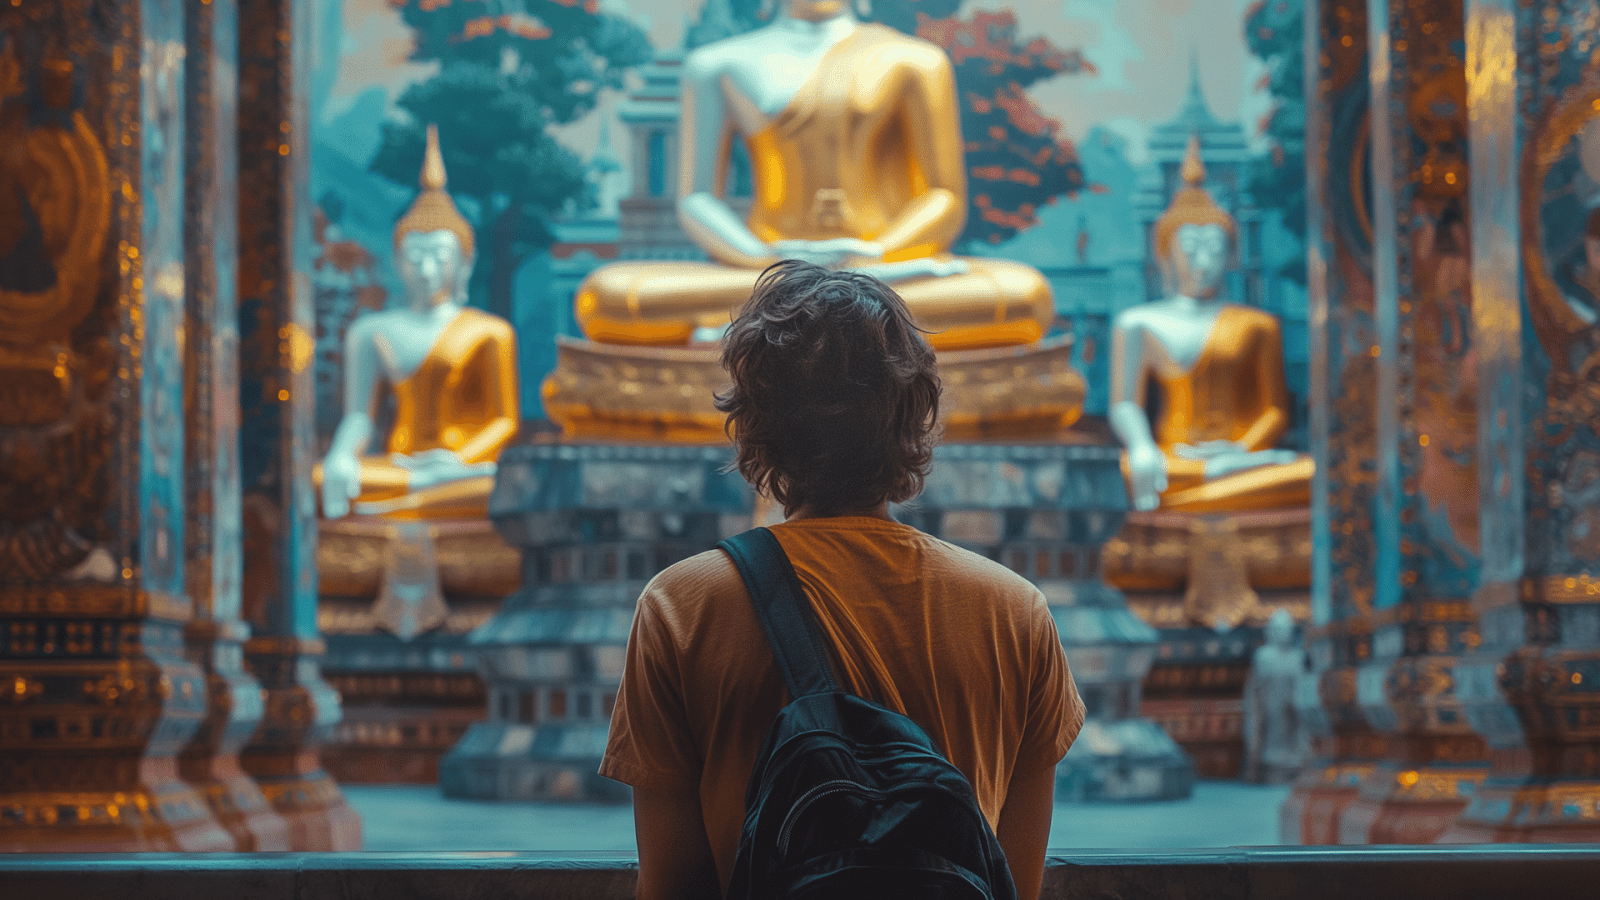 A traveler admiring golden Buddha statues in a Thailand temple